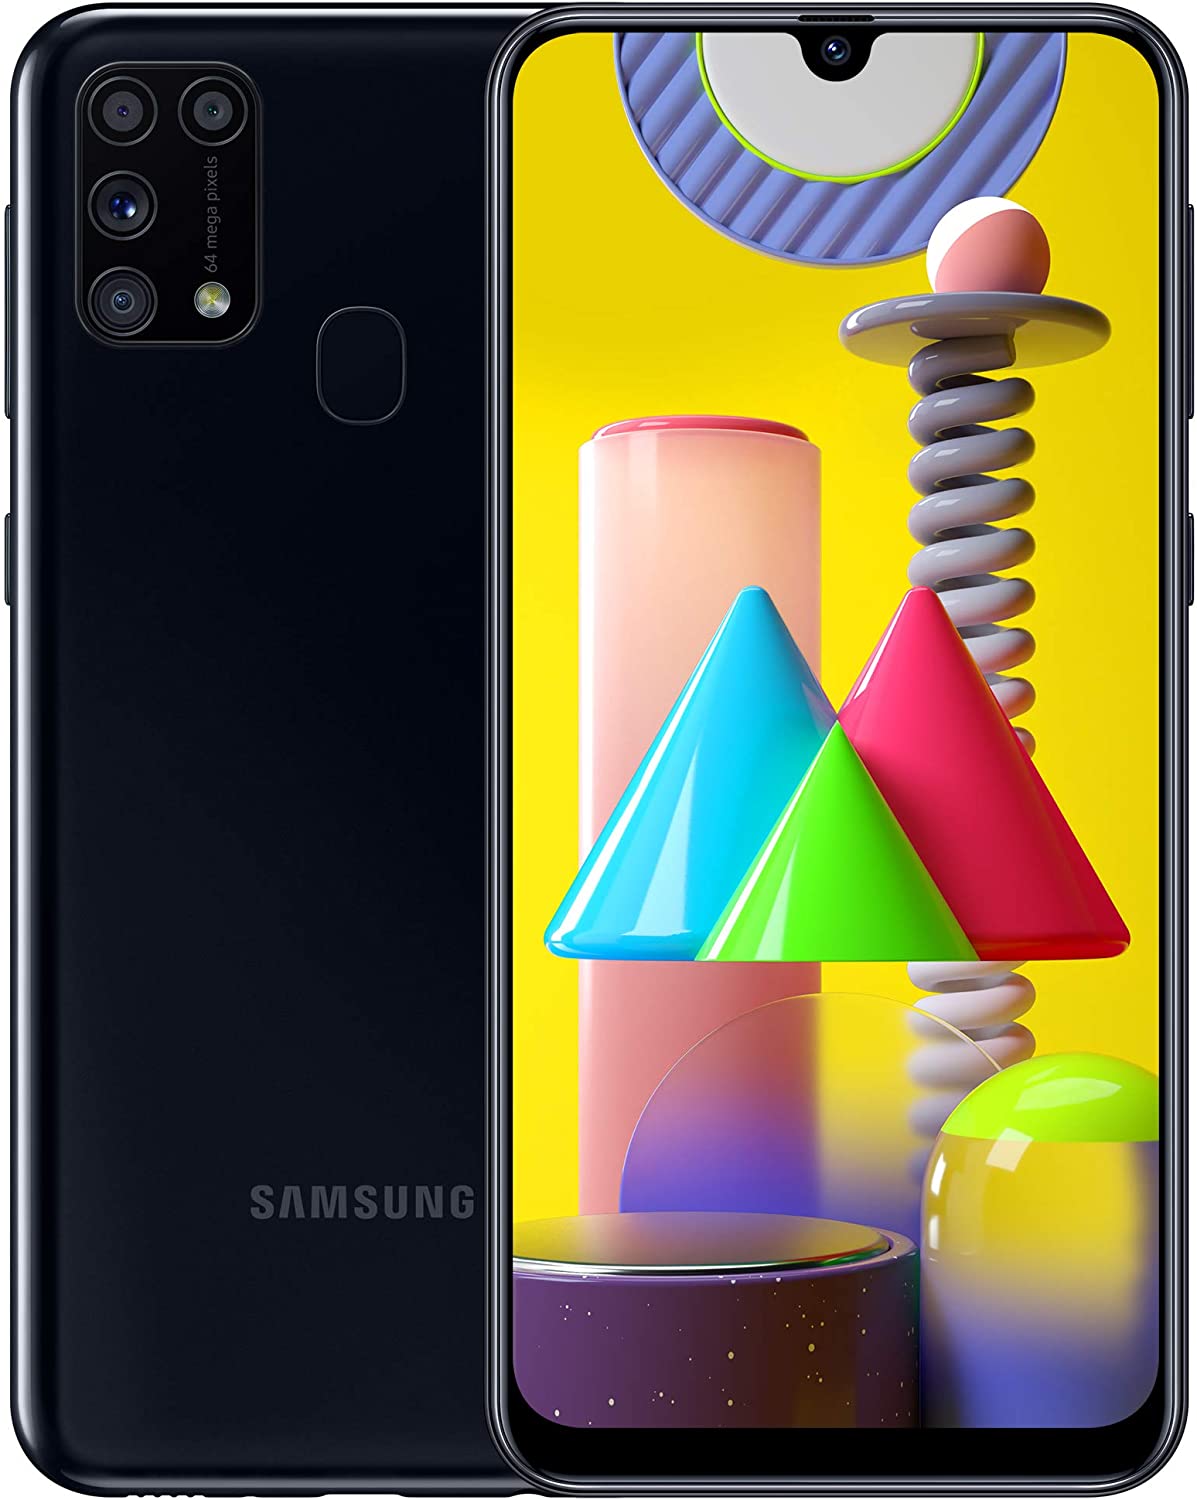 Bon plan : Le smartphone Samsung Galaxy M31&nbsp;© Amazon